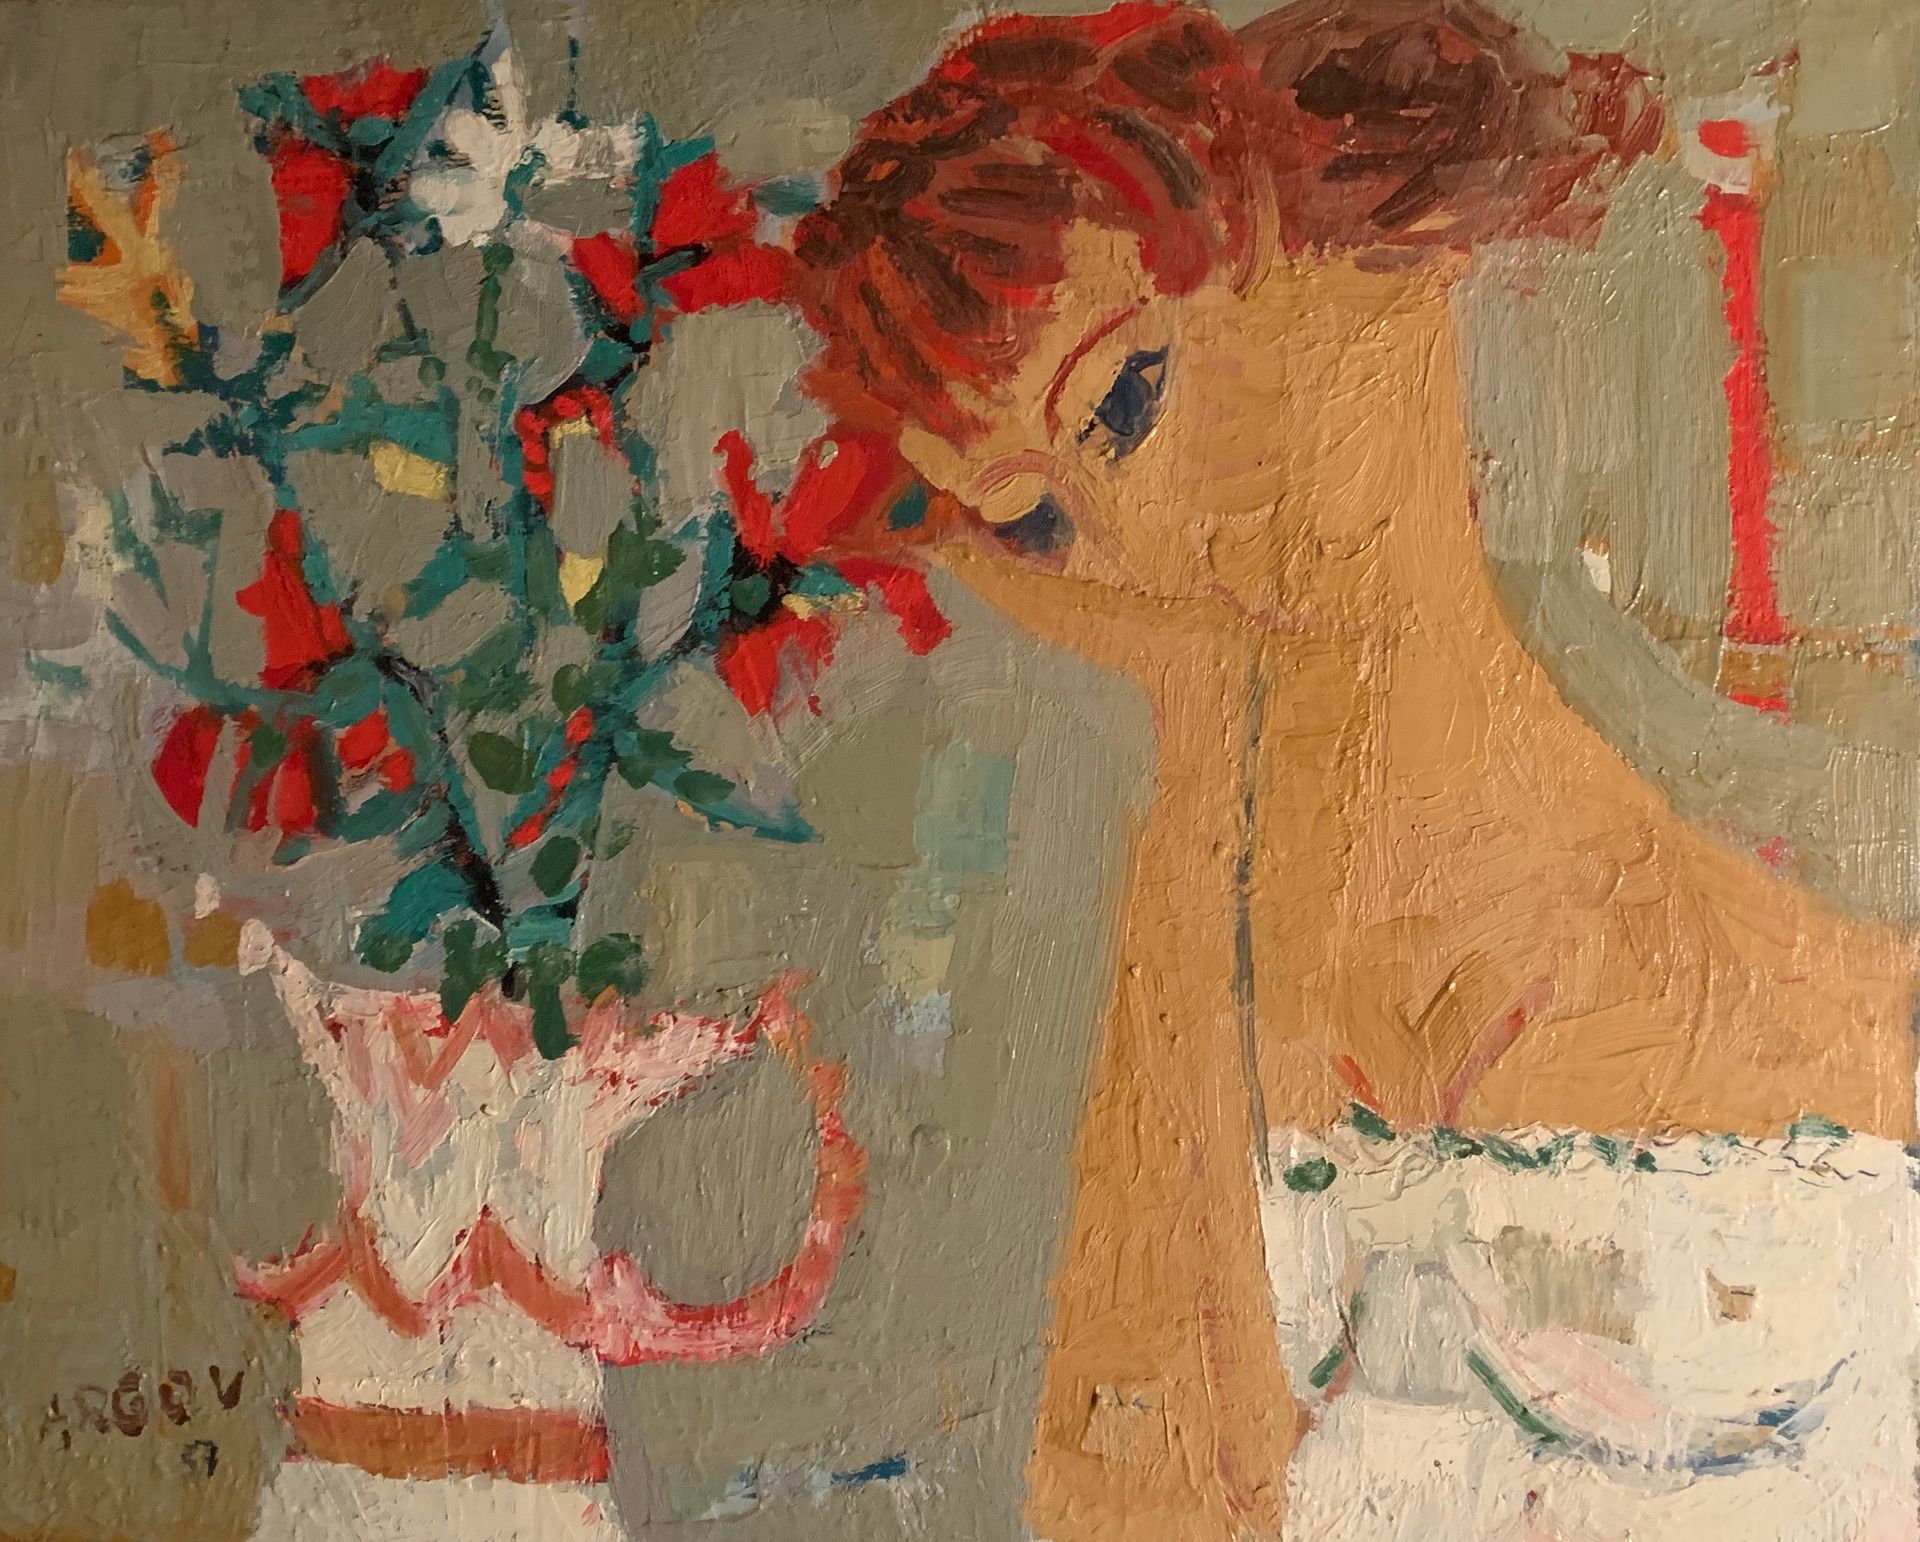 Null 
迈克尔-阿戈夫(1920-1982)

捧着一束花的女人

布面油画，左下方有签名和日期，背面有会签

60 x 72,5 cm